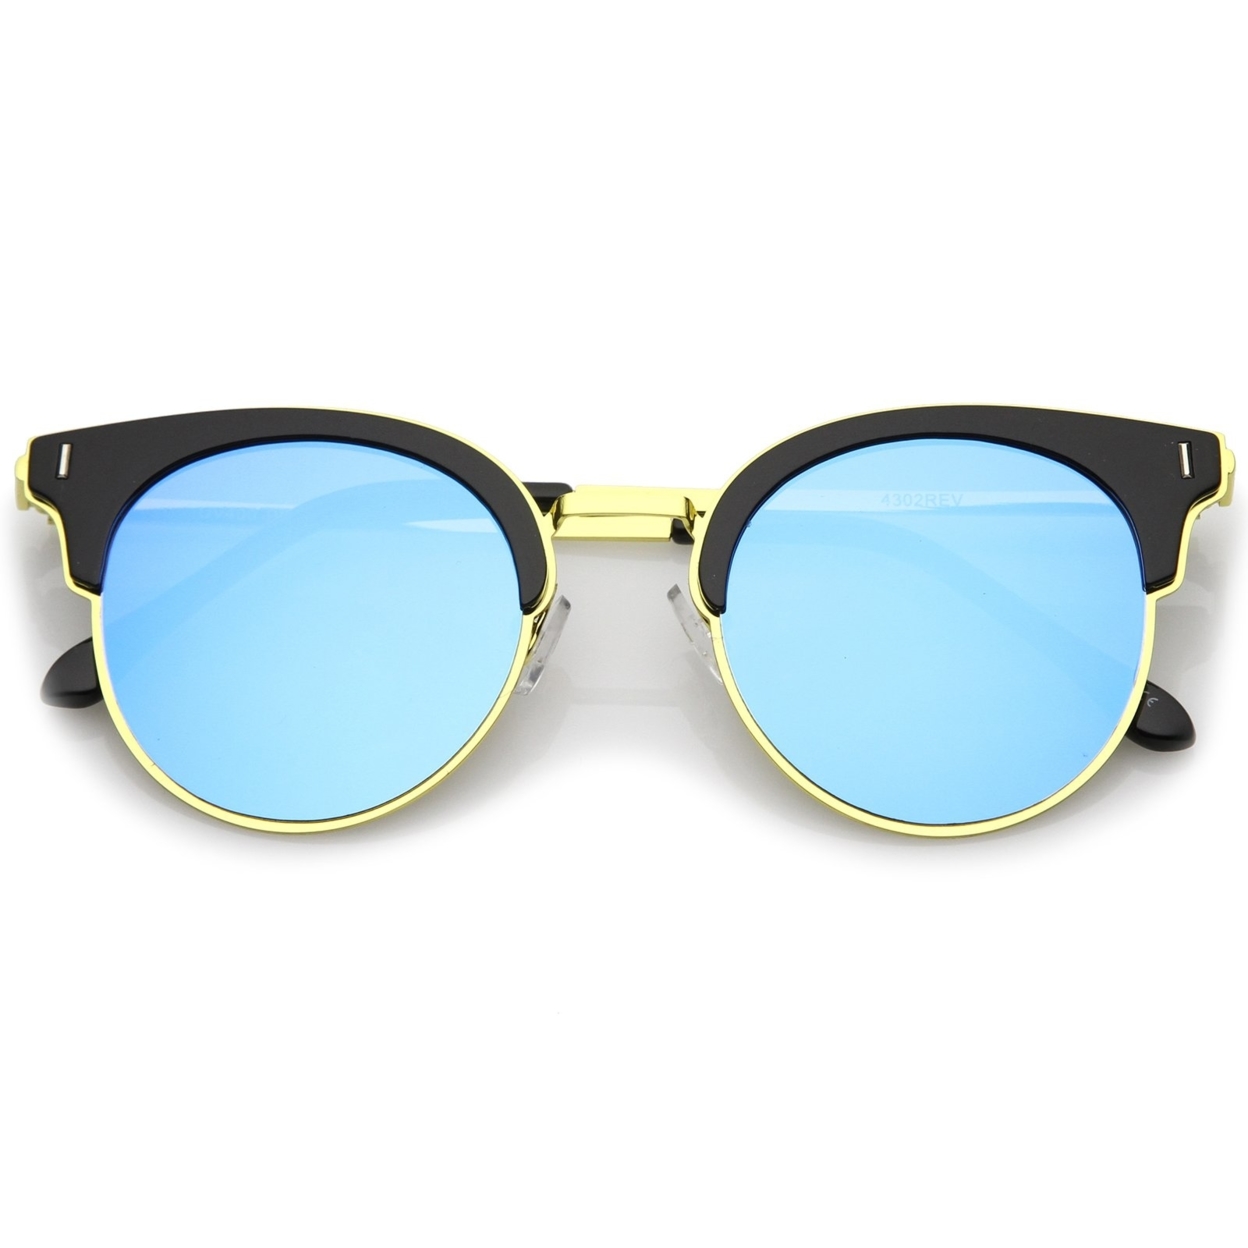 Modern Half Frame Round Colored Mirror Flat Lens Horn Rimmed Sunglasses 49mm - Black-Gold / Orange Mirror